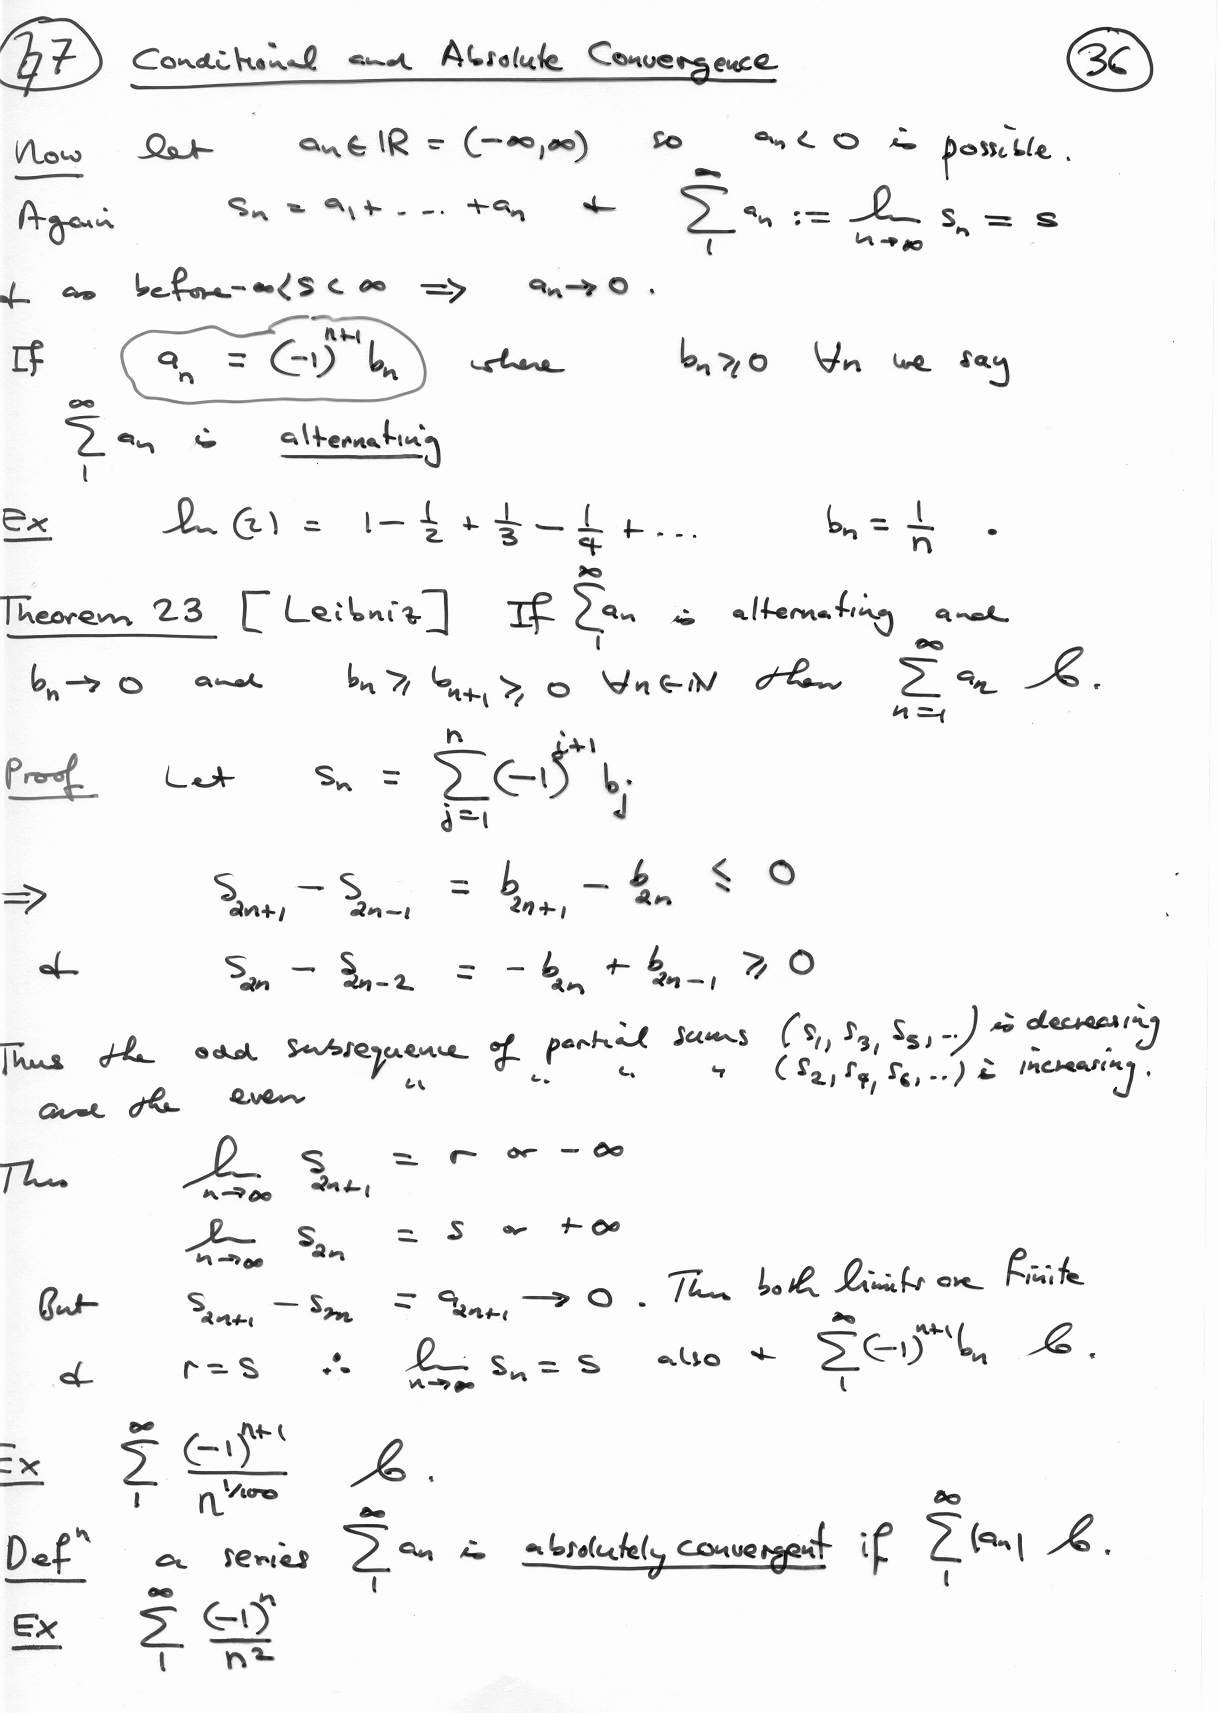 Intermediate Value theorem Worksheet Elegant Elements Of Analysis and Algebra Part A